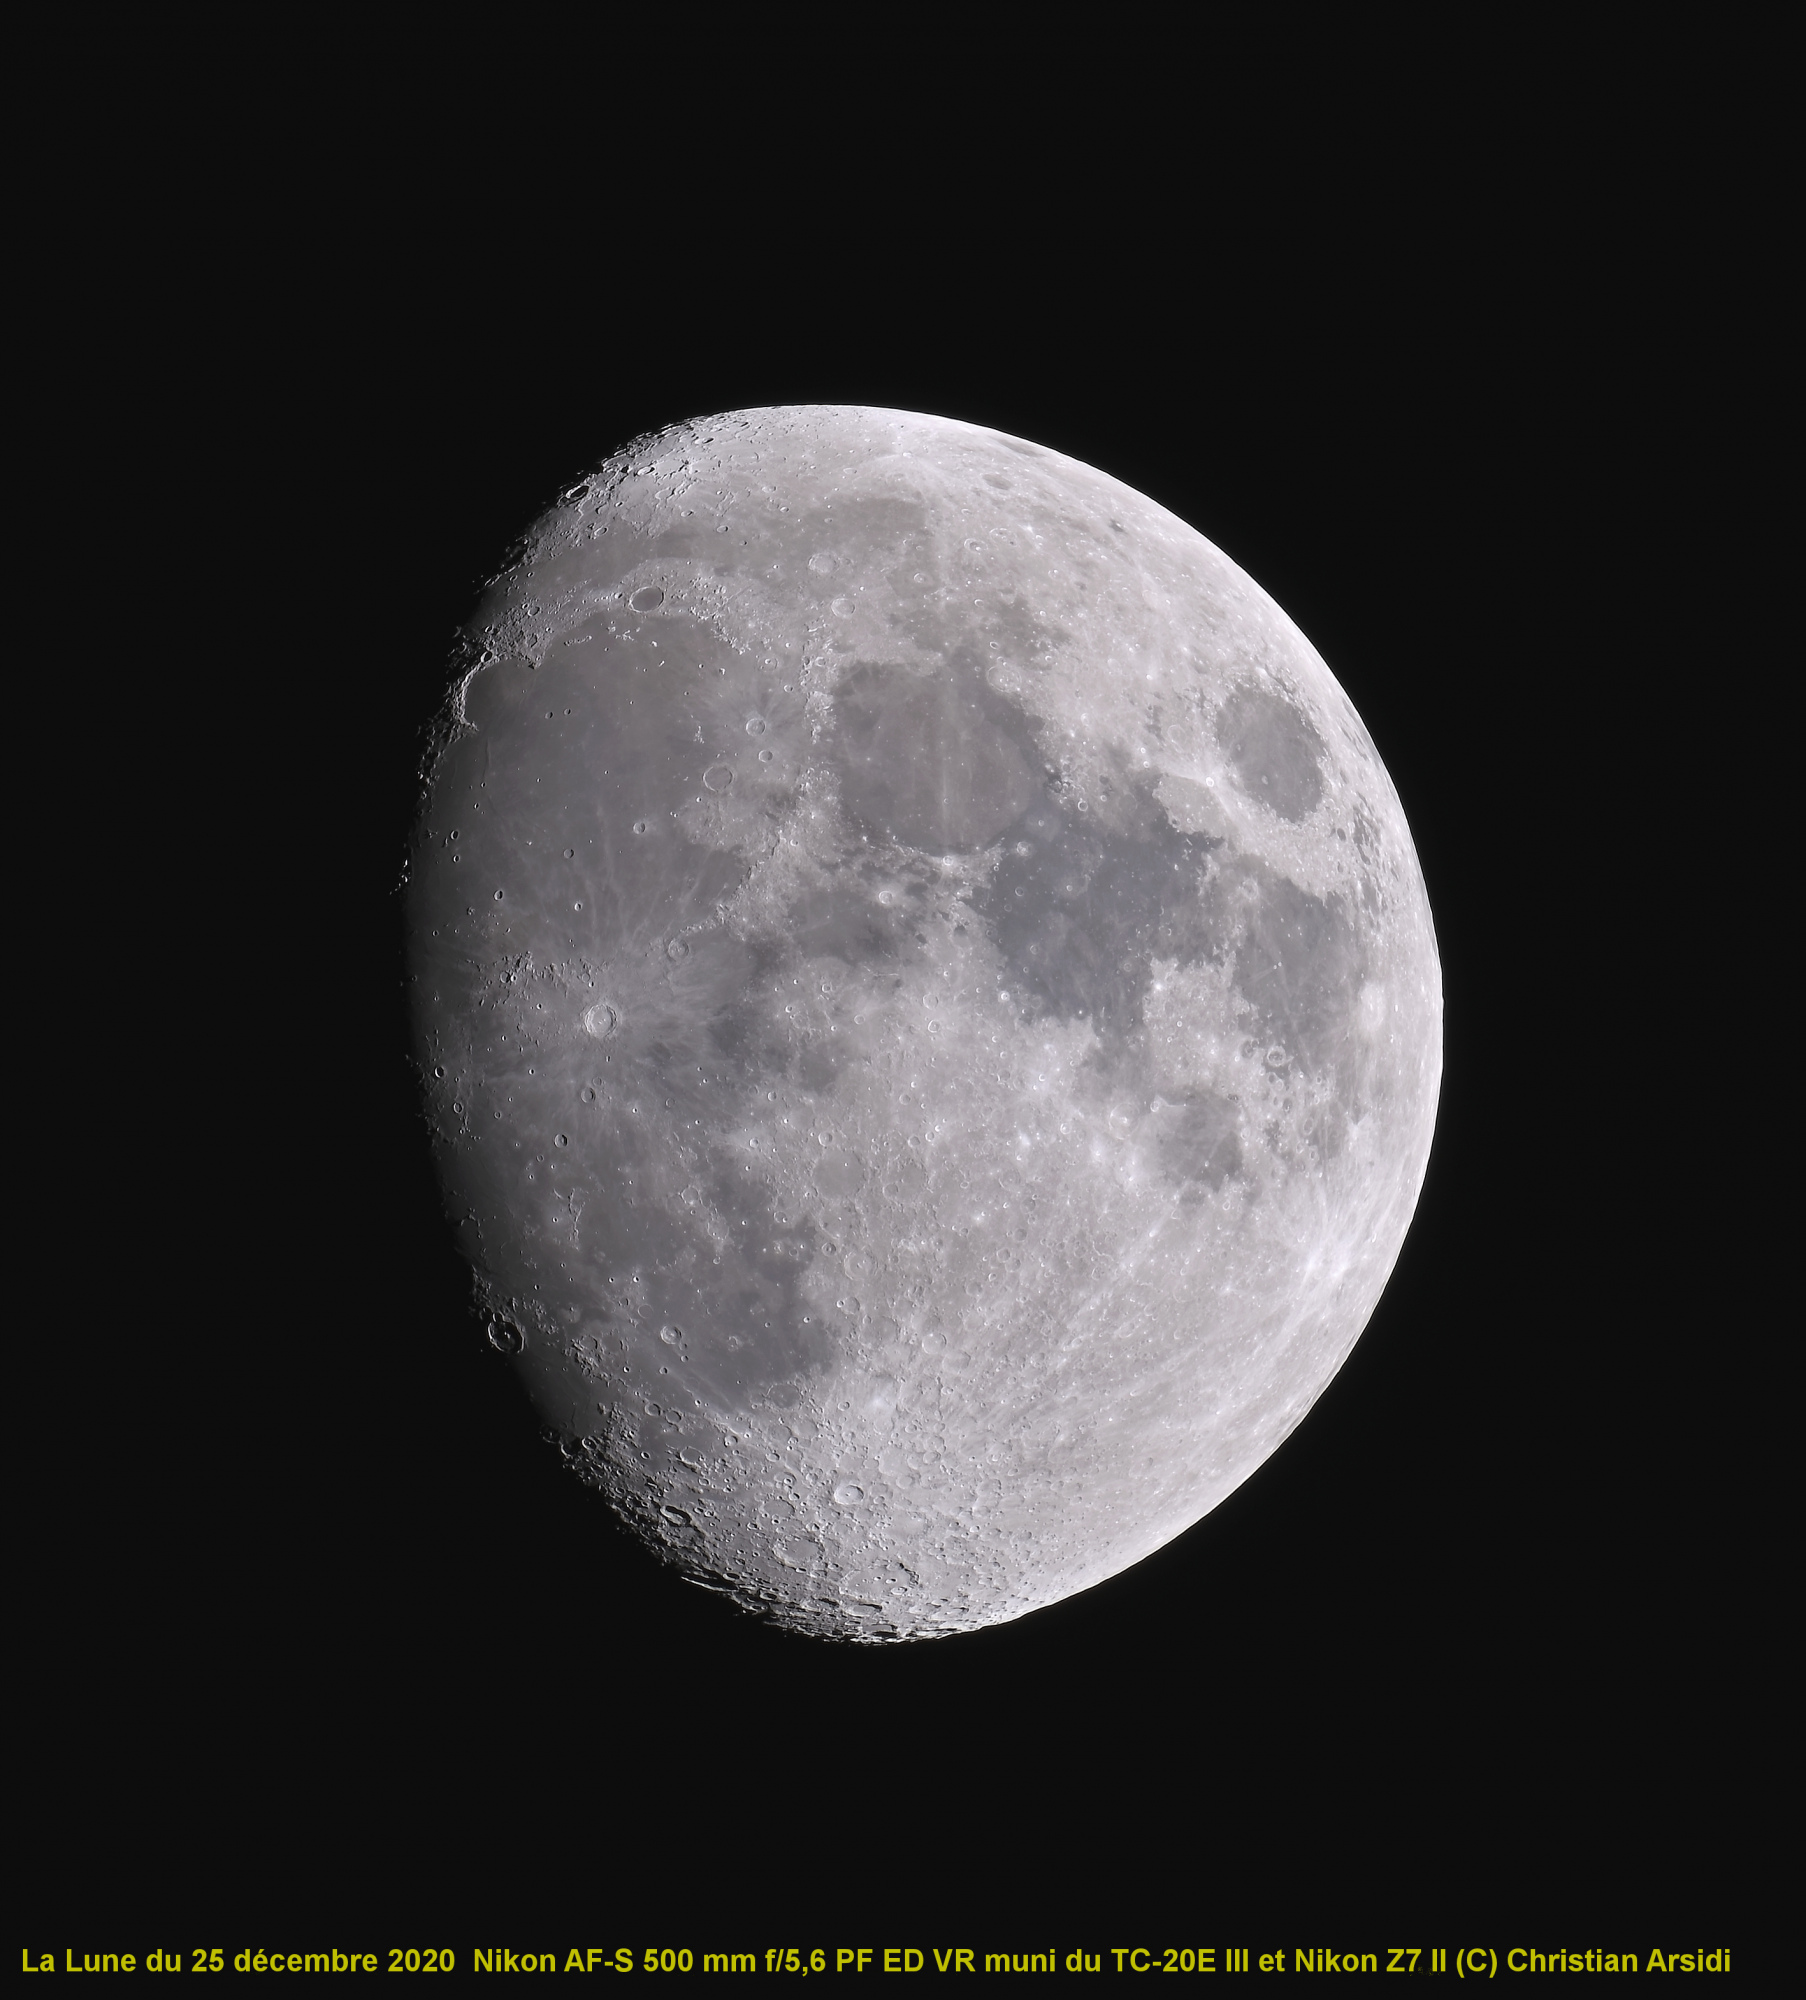 La Lune 20 images V2 recadrée_DxO 1.jpg